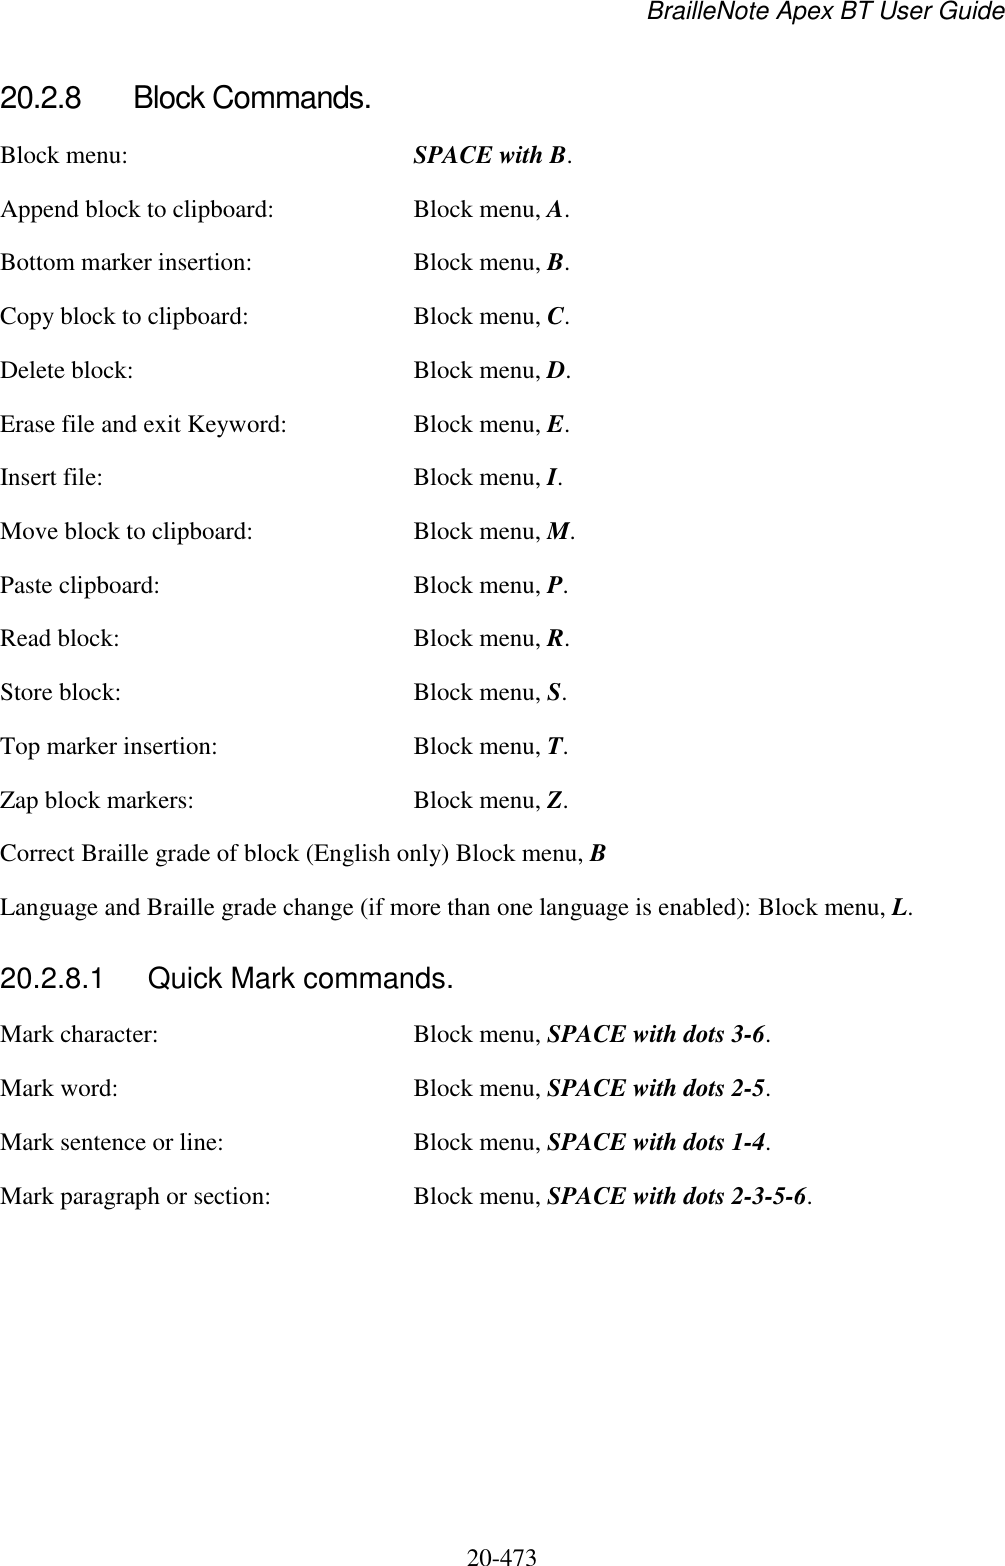 BrailleNote Apex BT User Guide   20-473   20.2.8  Block Commands. Block menu:  SPACE with B. Append block to clipboard:  Block menu, A. Bottom marker insertion:  Block menu, B. Copy block to clipboard:  Block menu, C. Delete block:  Block menu, D. Erase file and exit Keyword:  Block menu, E. Insert file:  Block menu, I. Move block to clipboard:  Block menu, M. Paste clipboard:  Block menu, P. Read block:  Block menu, R. Store block:  Block menu, S. Top marker insertion:  Block menu, T. Zap block markers:  Block menu, Z. Correct Braille grade of block (English only) Block menu, B Language and Braille grade change (if more than one language is enabled): Block menu, L.  20.2.8.1  Quick Mark commands. Mark character:  Block menu, SPACE with dots 3-6. Mark word:  Block menu, SPACE with dots 2-5. Mark sentence or line:  Block menu, SPACE with dots 1-4. Mark paragraph or section:  Block menu, SPACE with dots 2-3-5-6.   